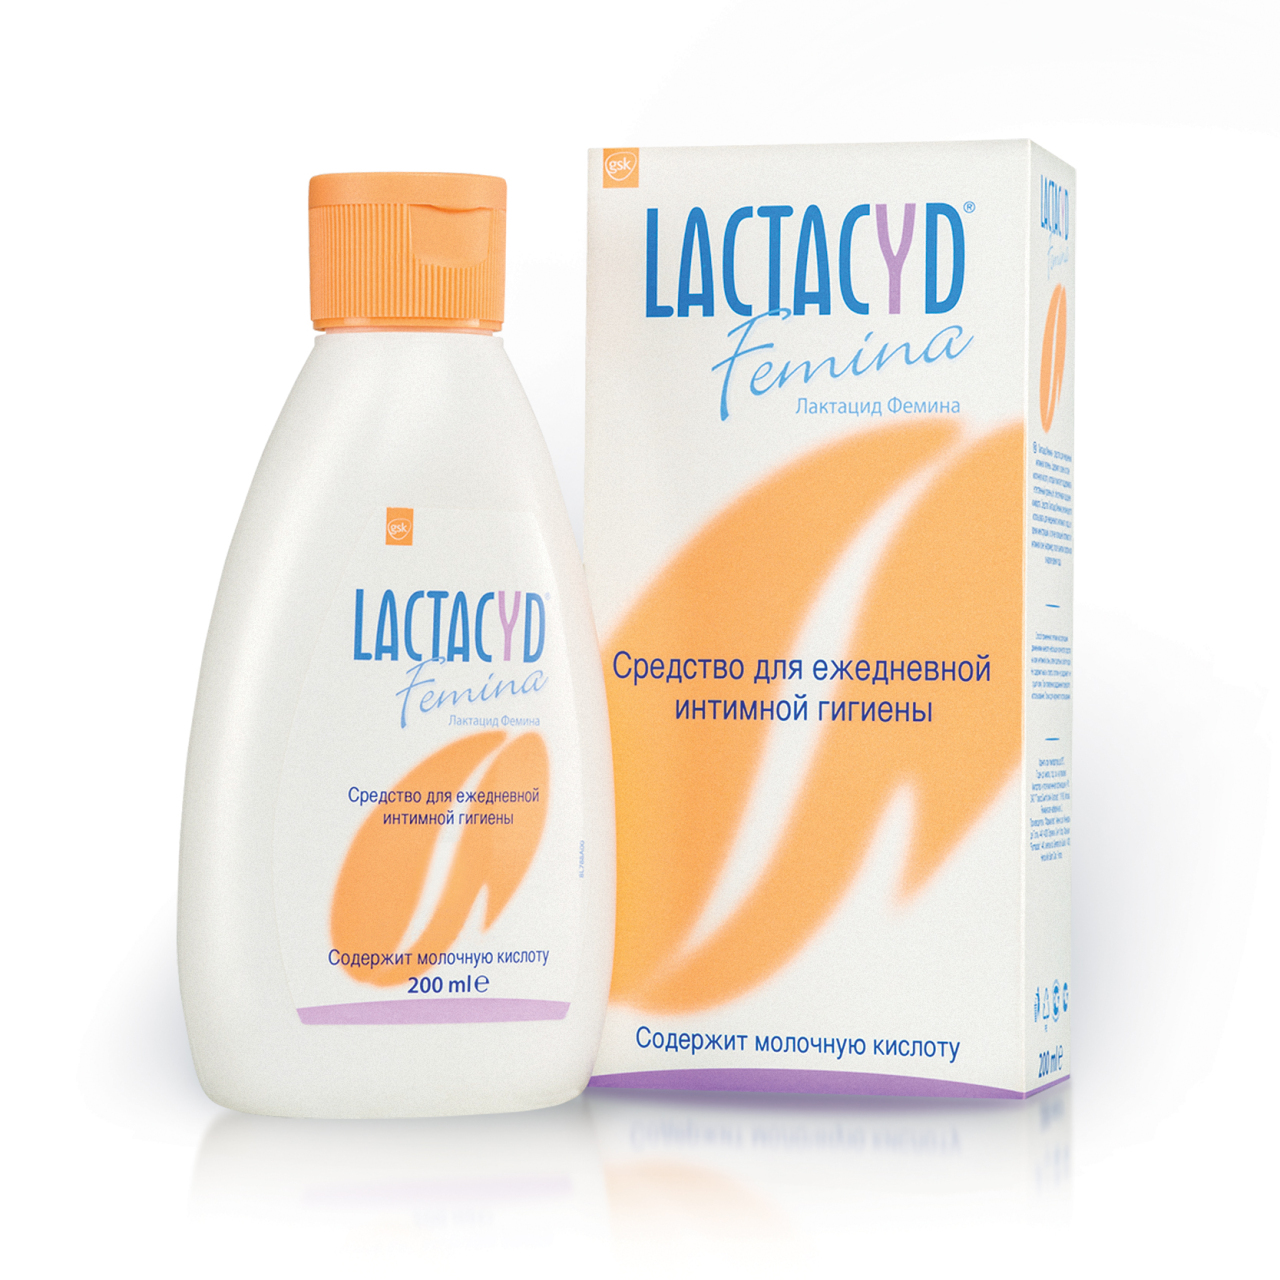 Lactacyd femina инструкция